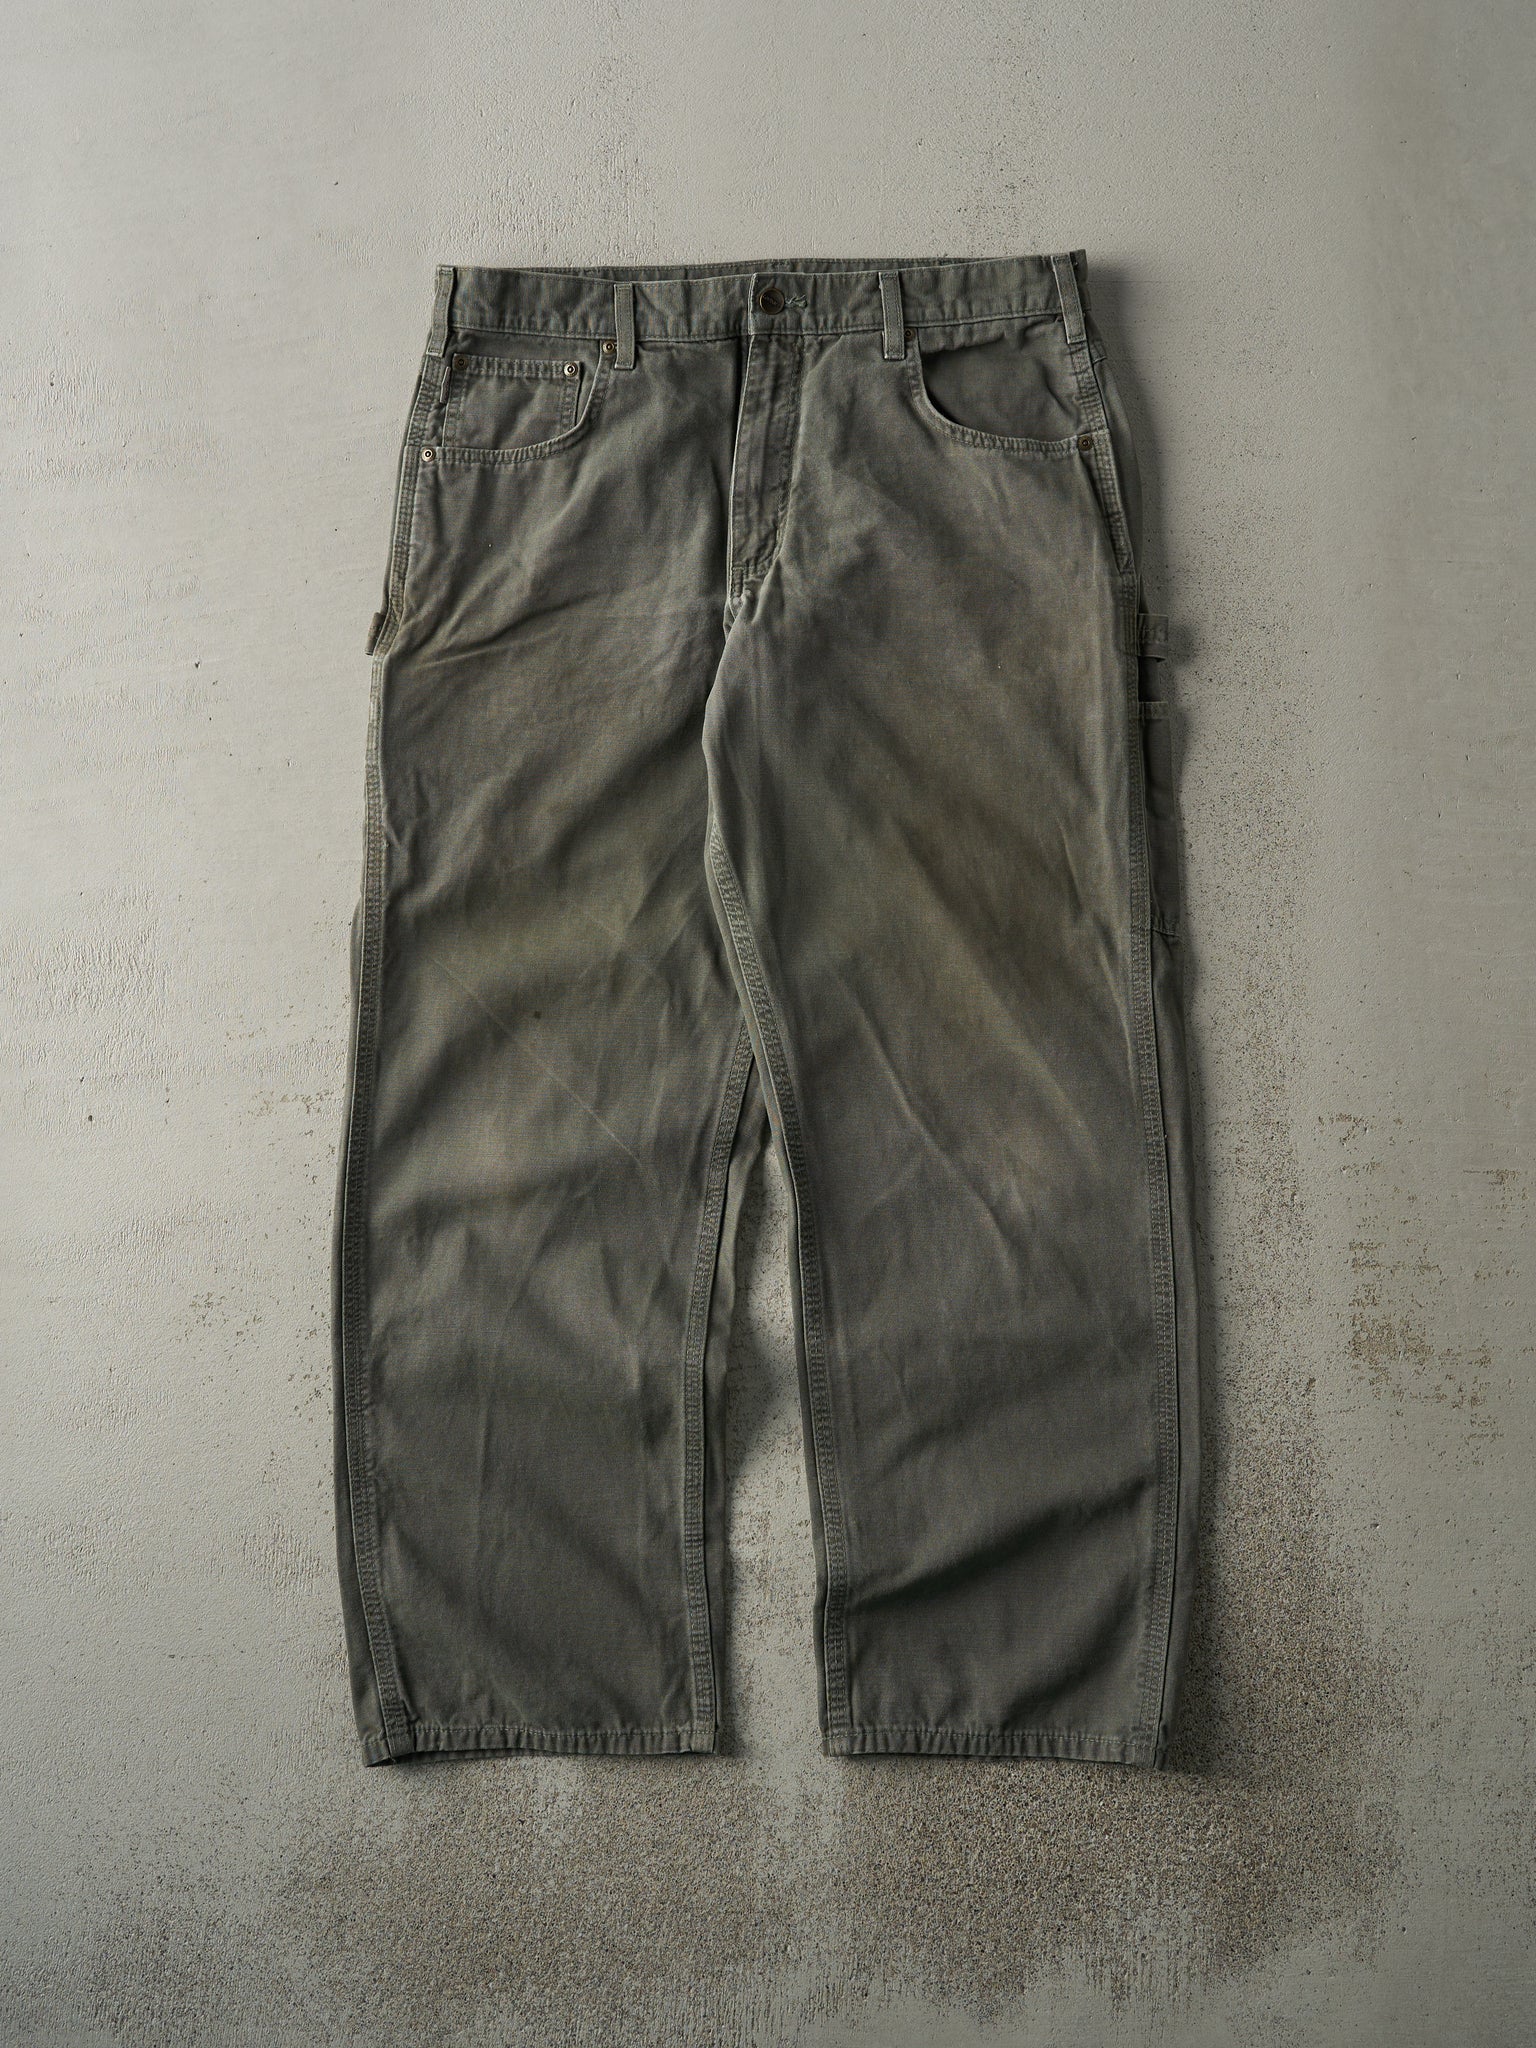 Vintage 90s Green Carhartt Carpenter Pants (34x30)